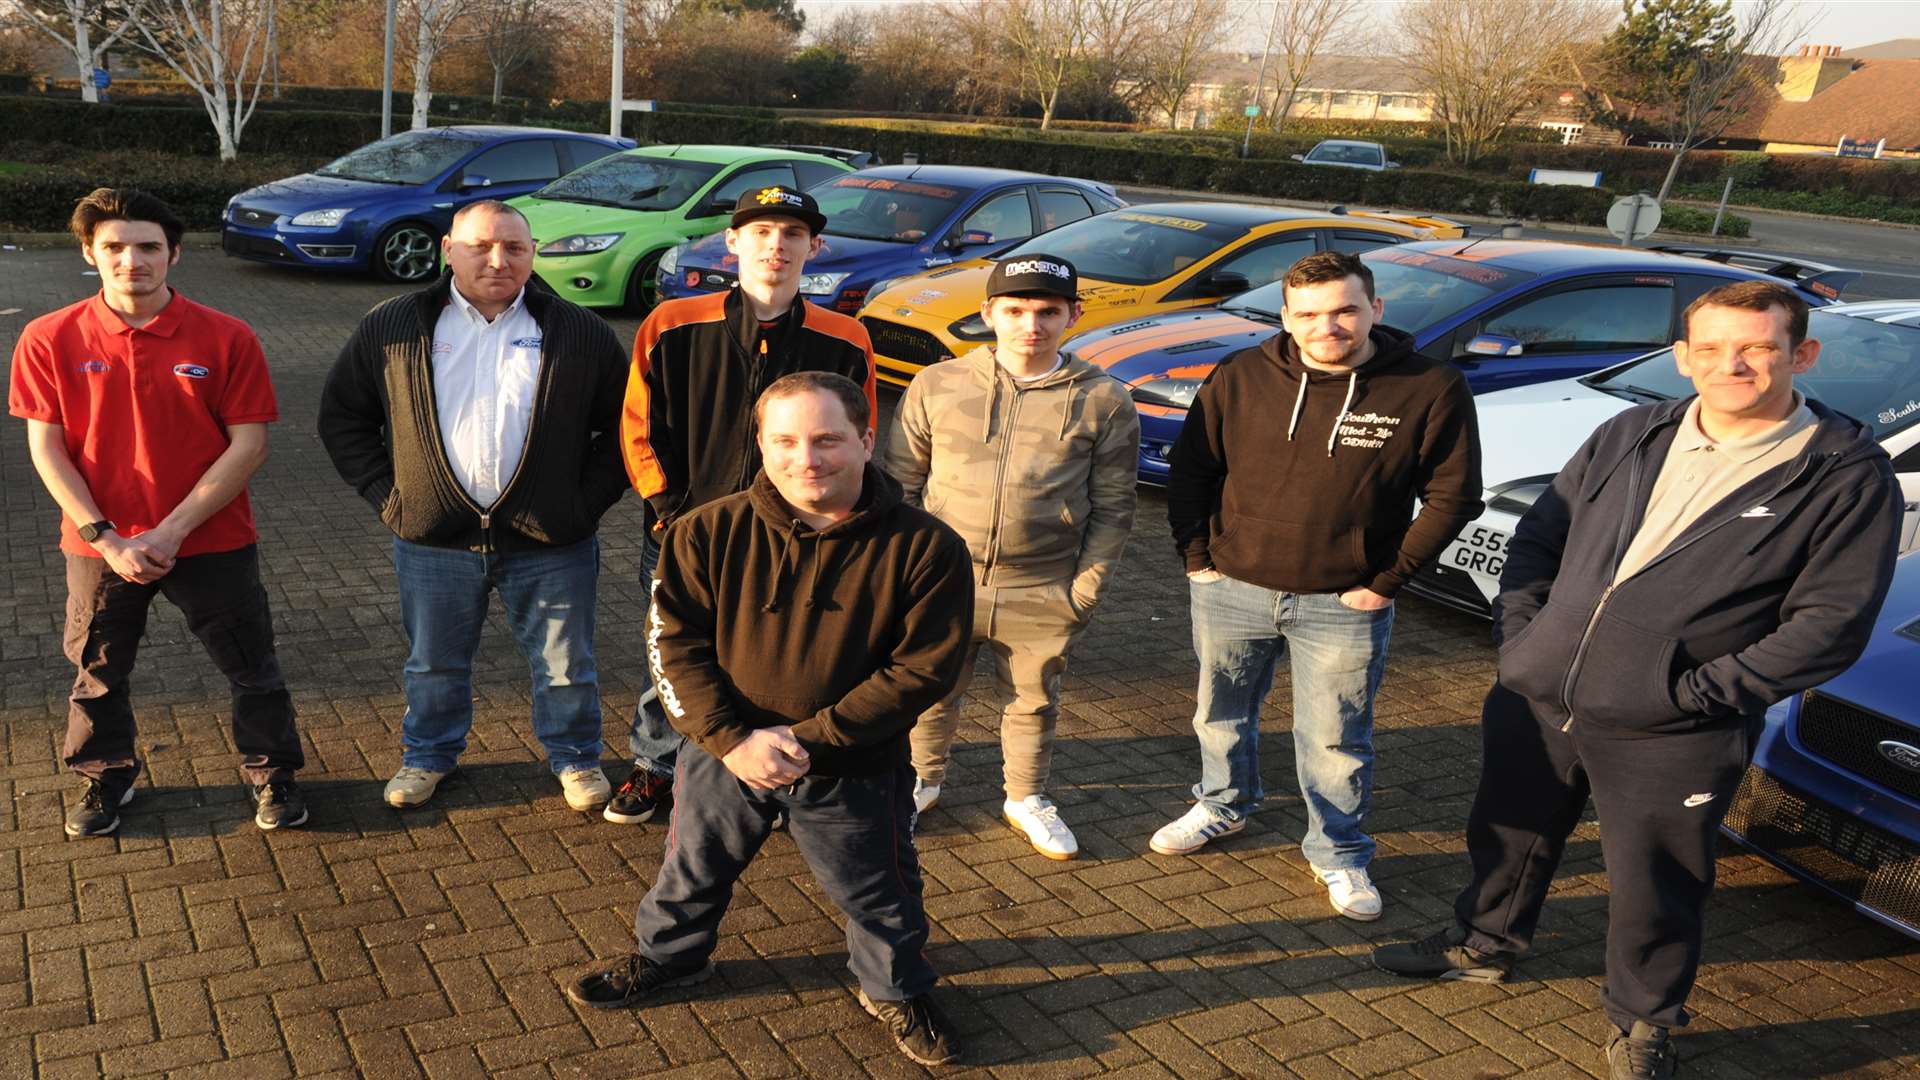 Members of the London & Southeast car club